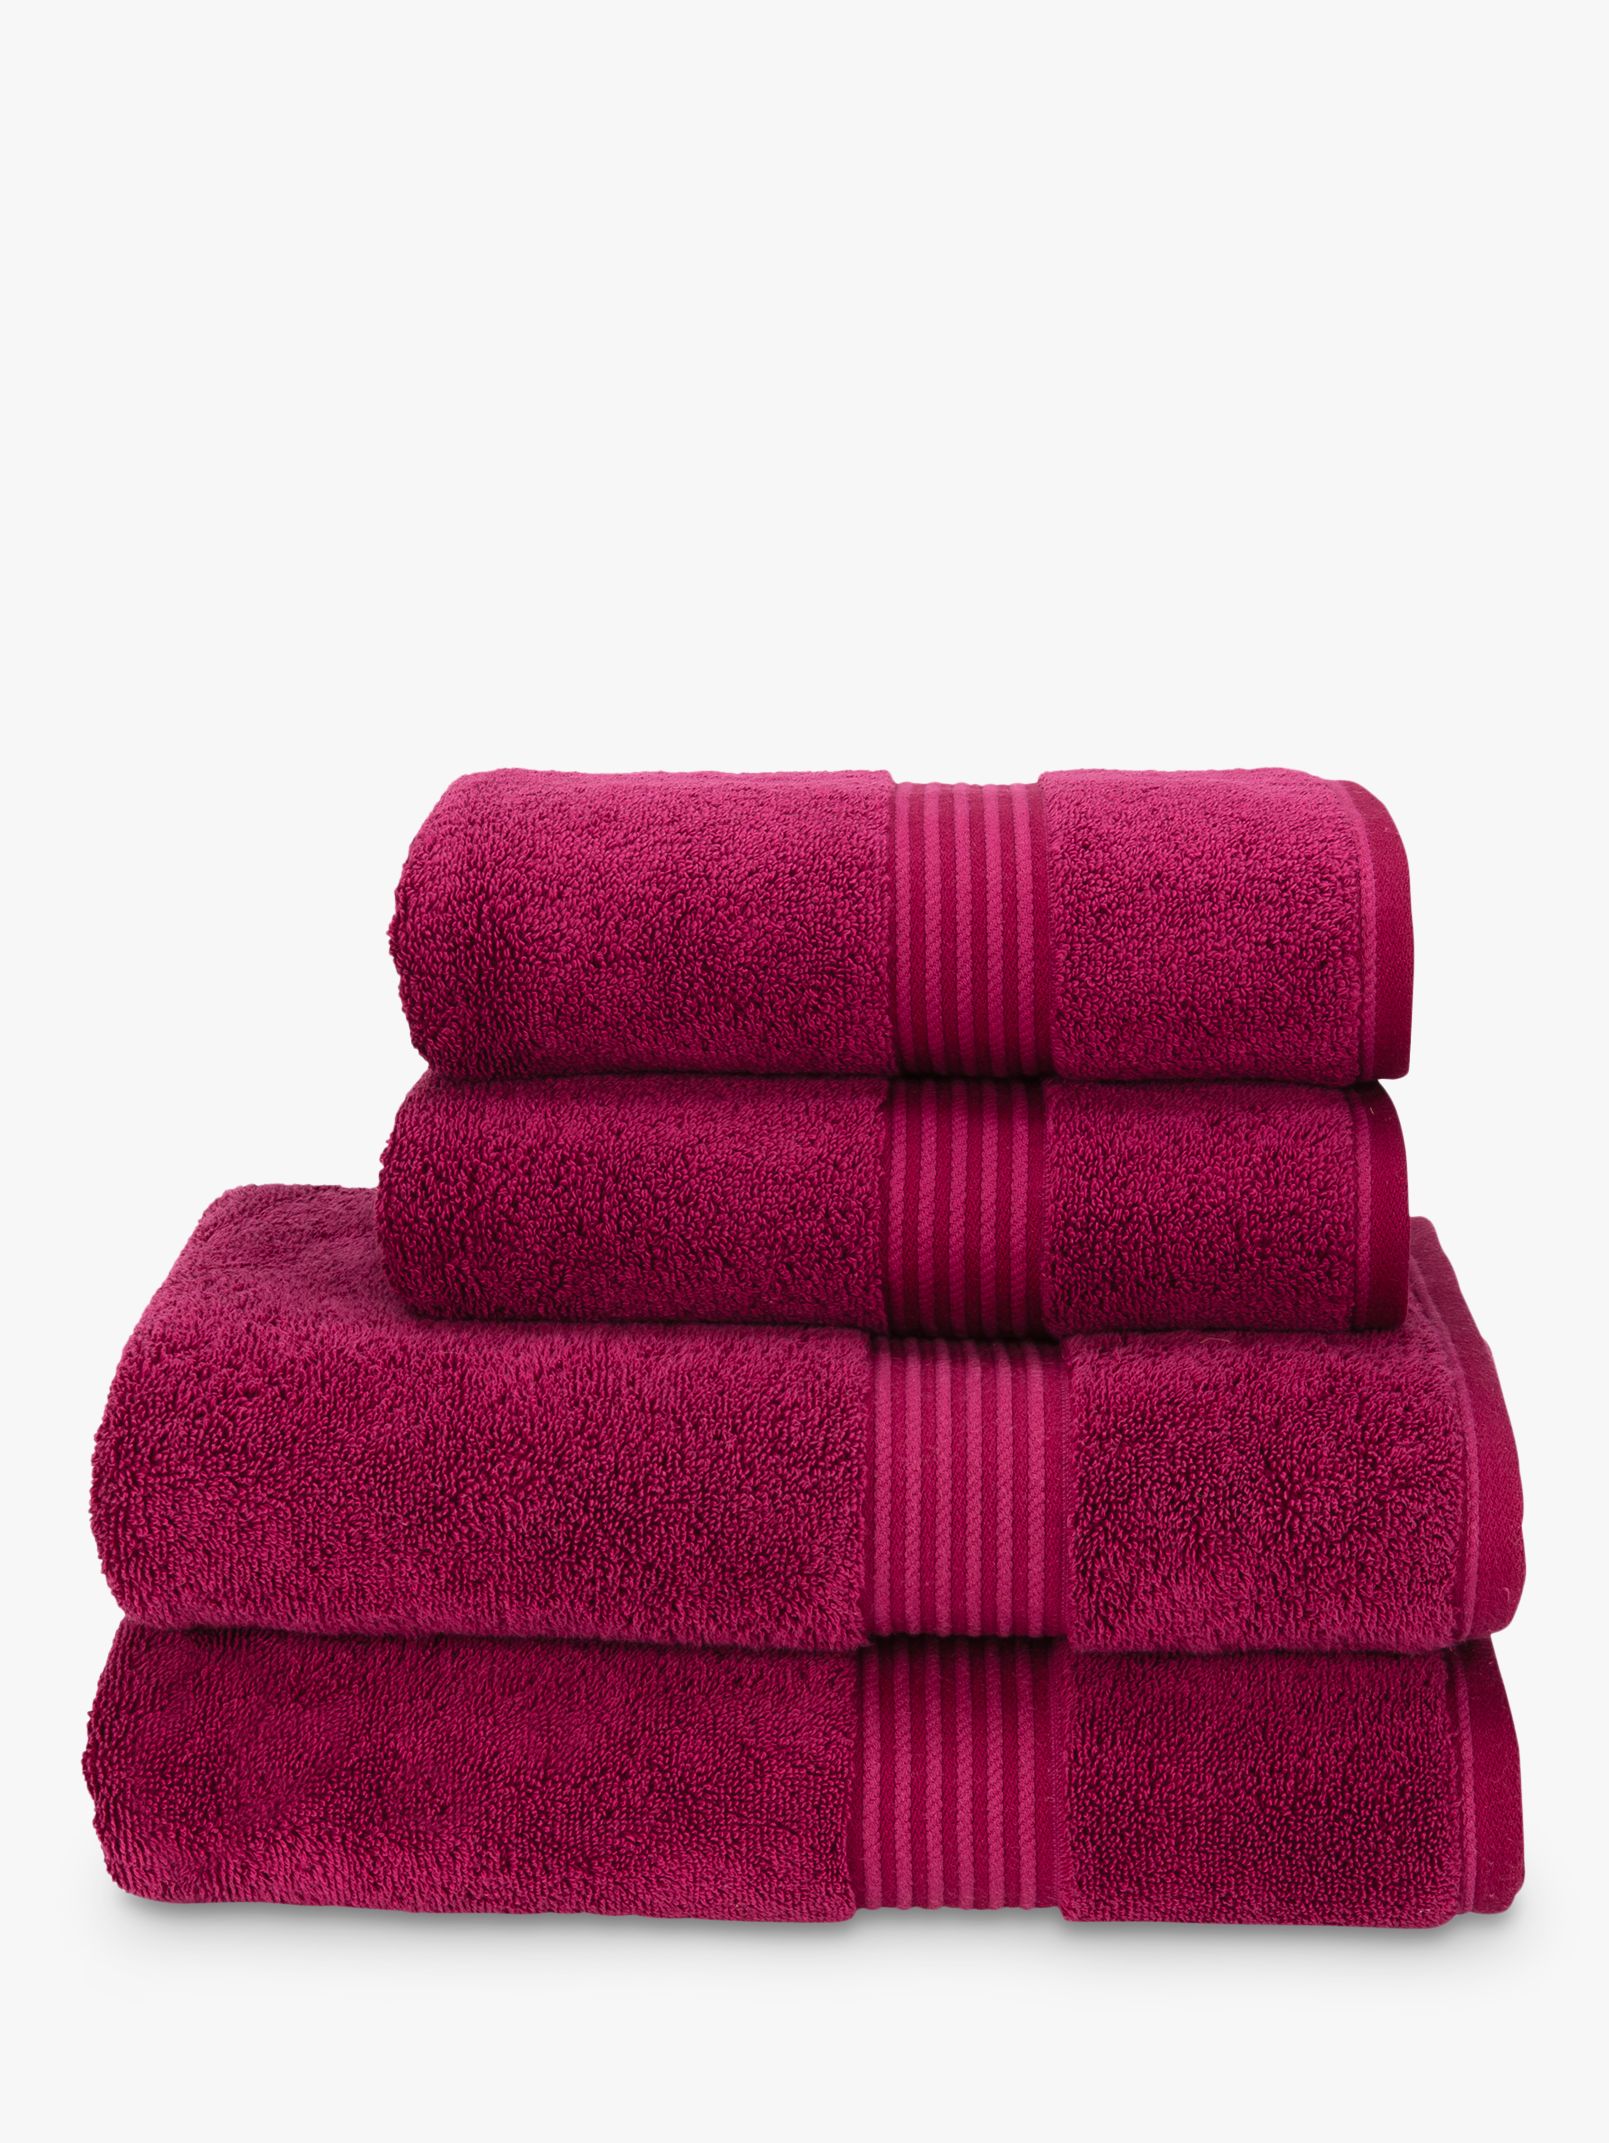 Christy Supreme Hygro Bath Towel, Raspberry